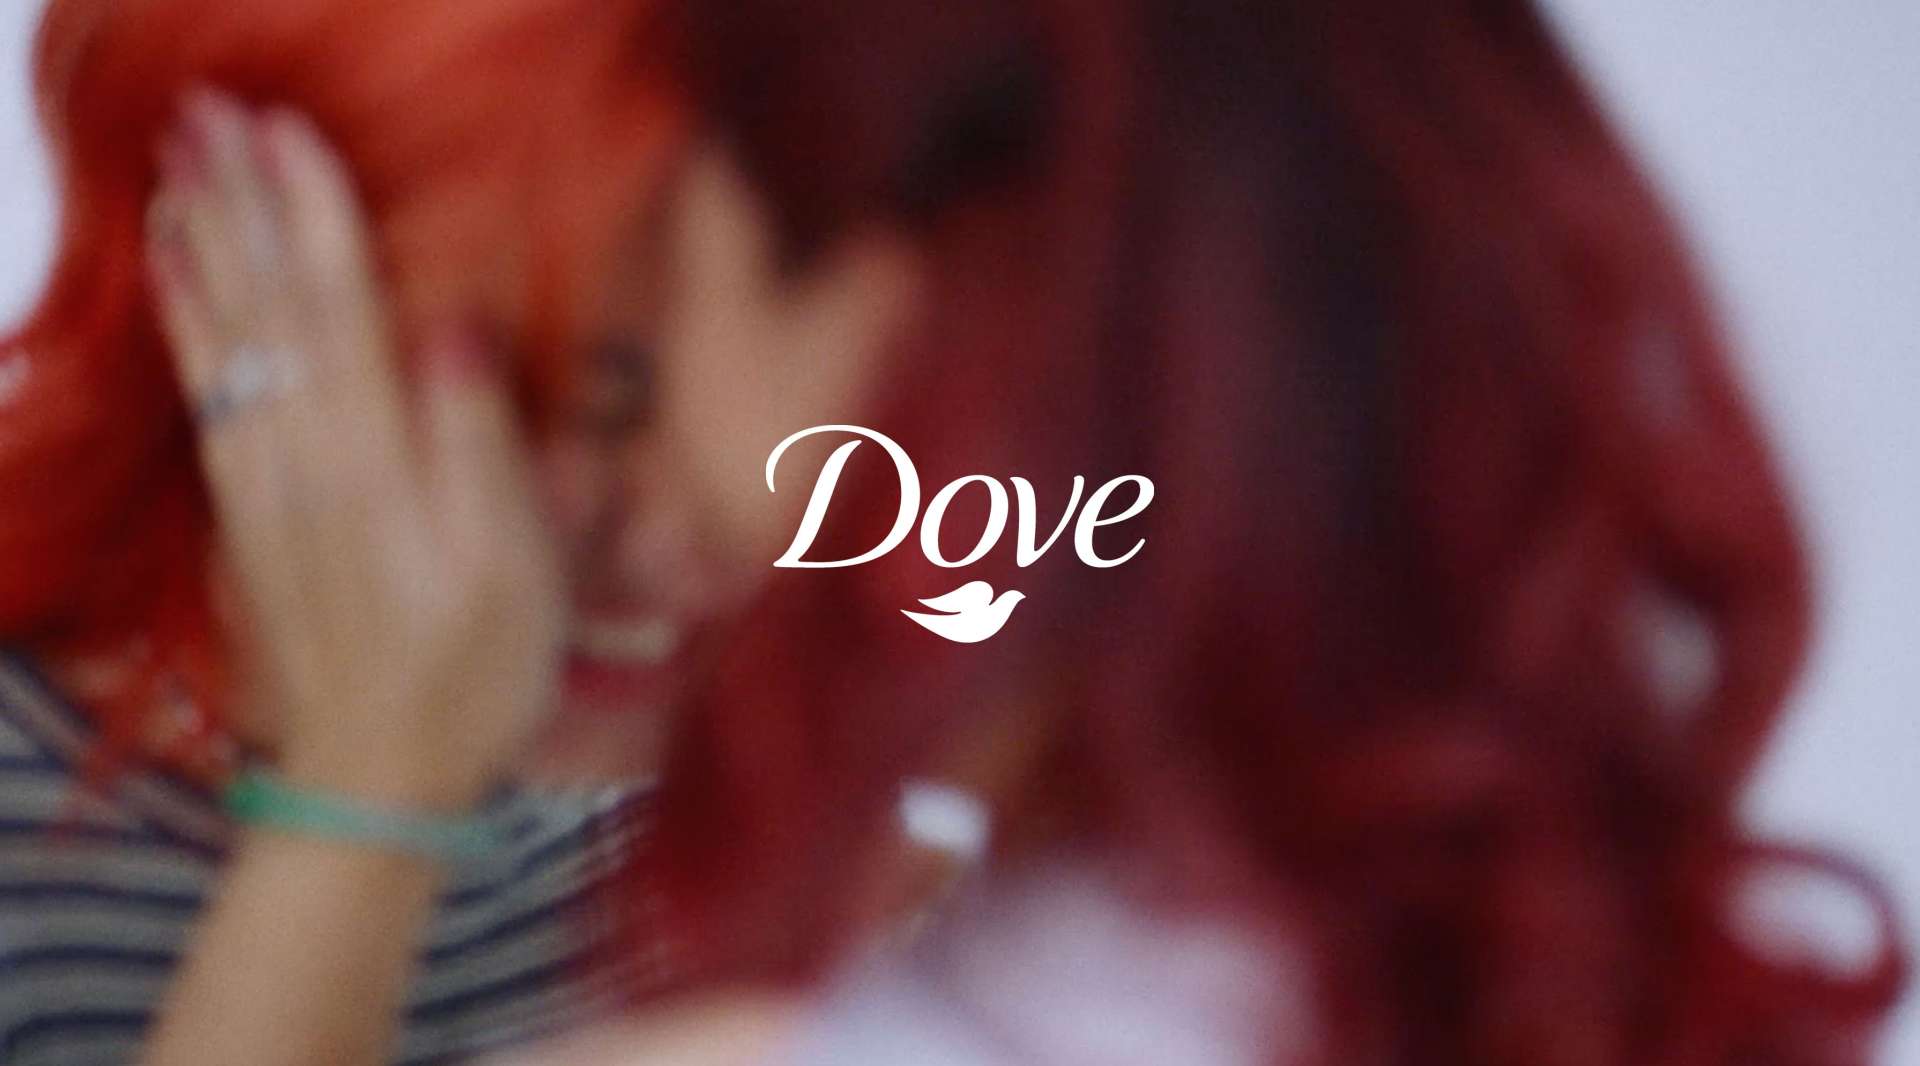 Dove - Hair Stories [Social Experiment]